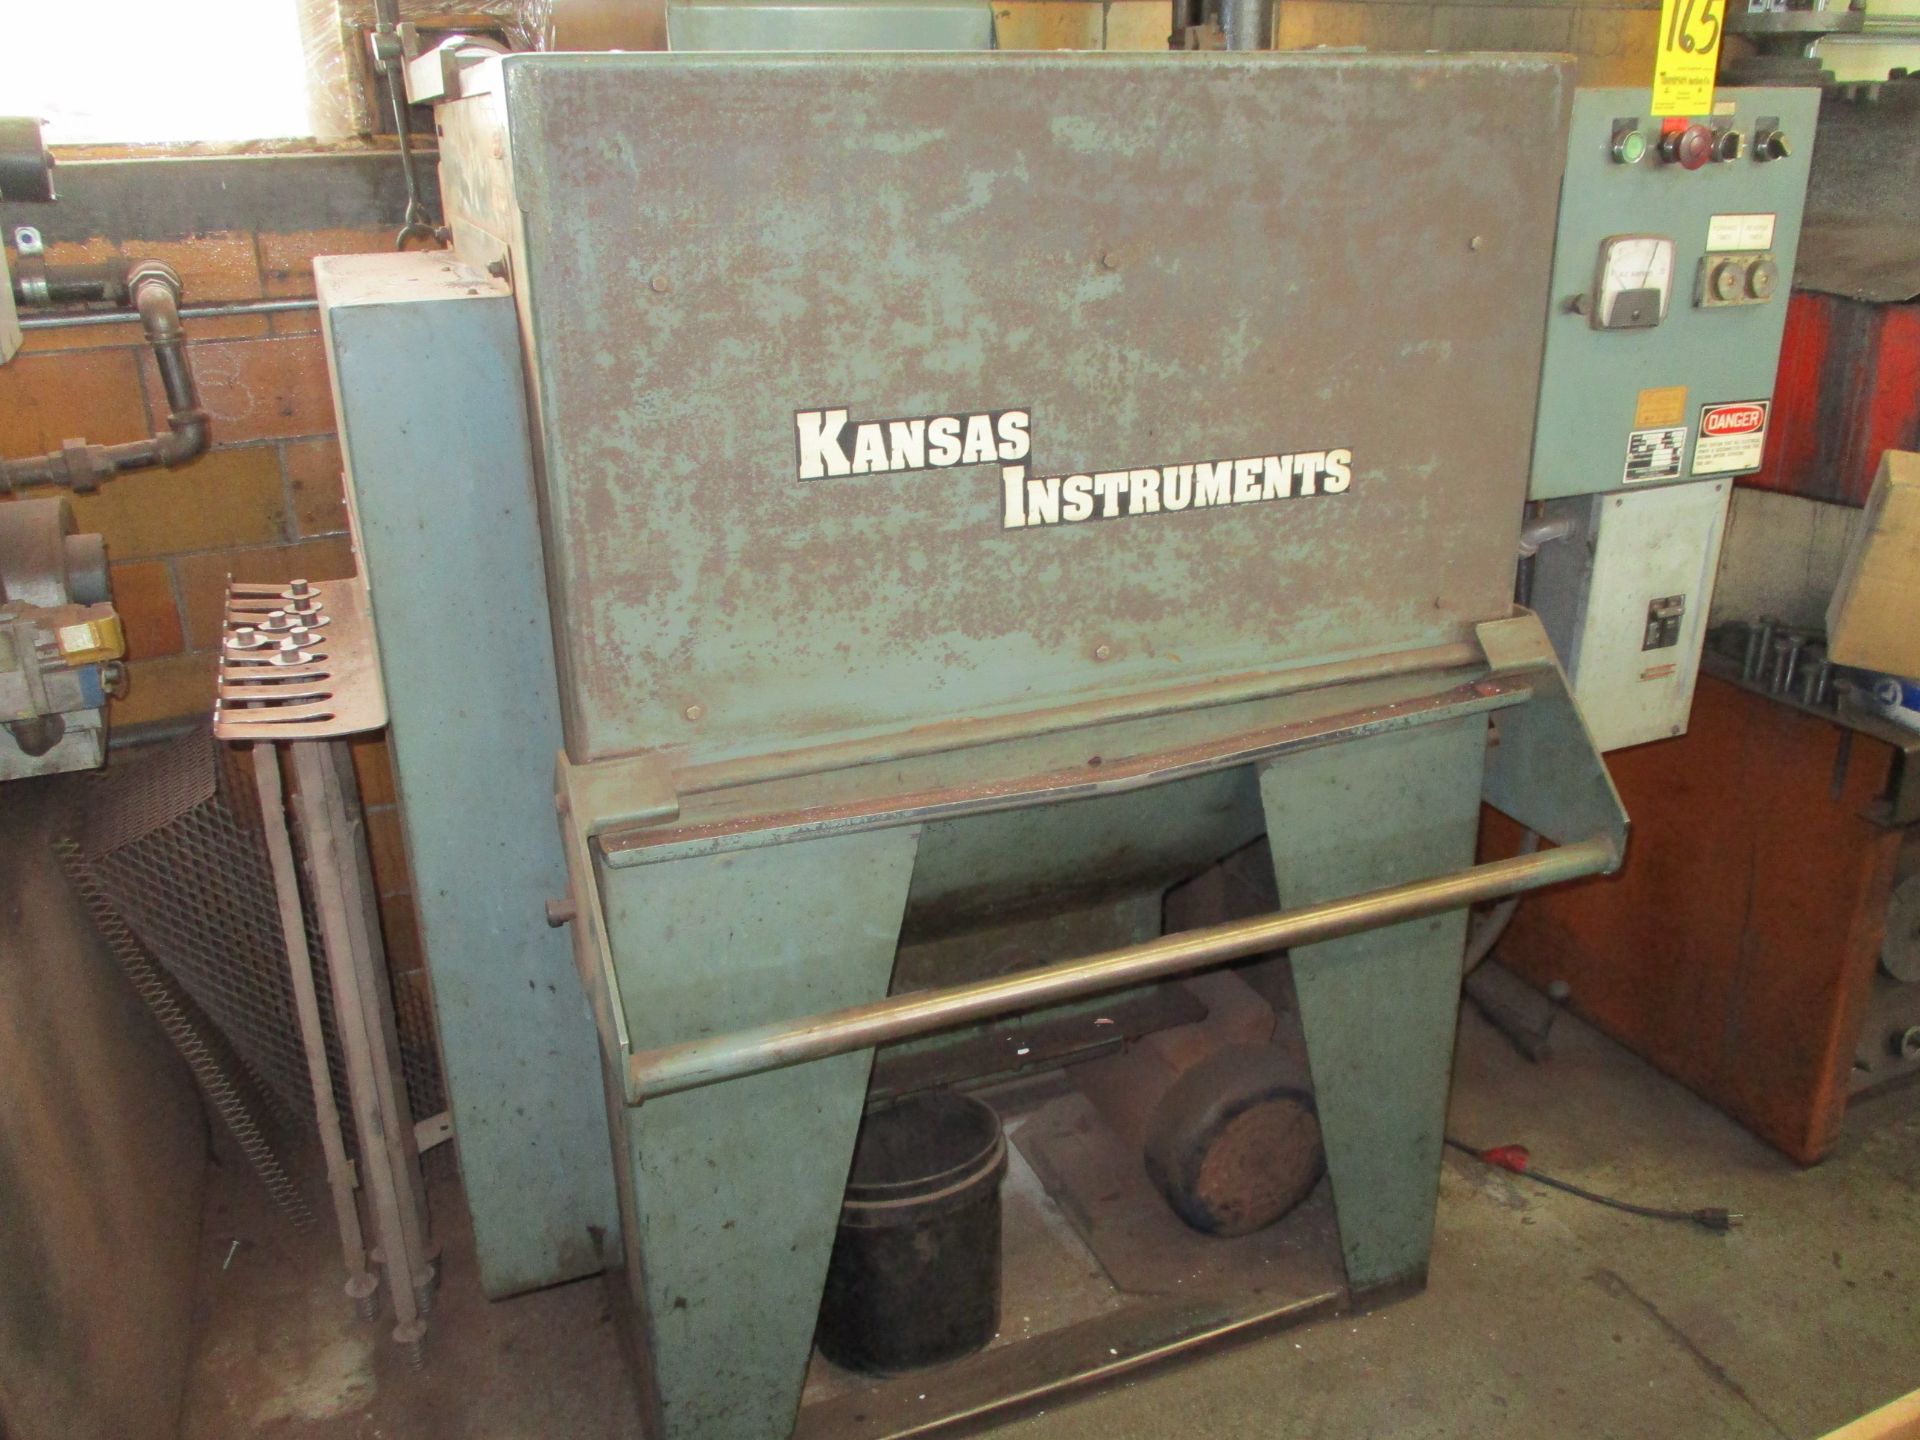 Kansas Instrument Model AB-502B Shot Blast Machine, SN 26678, with Dust Collector, 230V, 1 phase